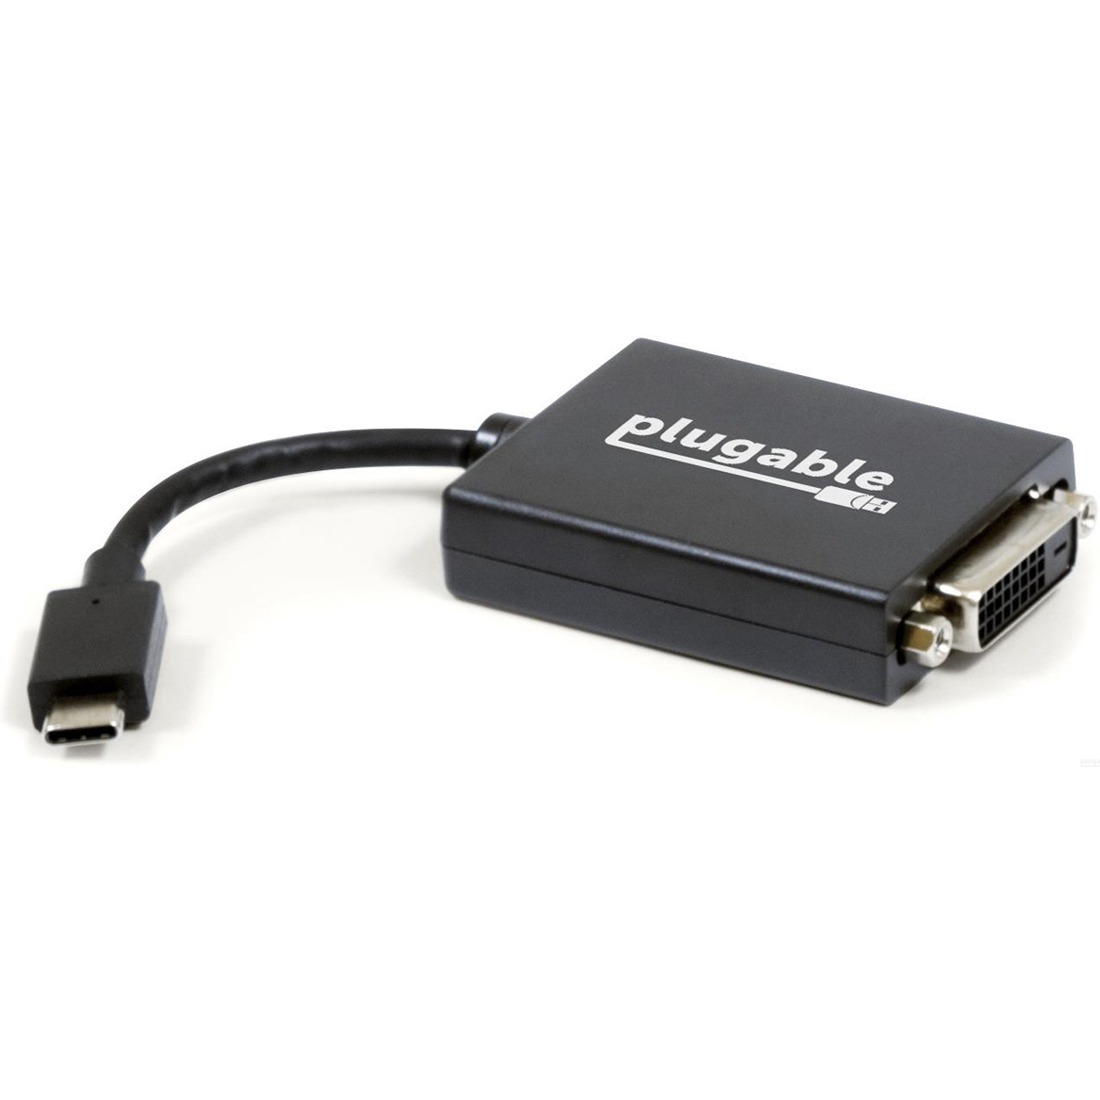  Plugable USB 3.0 to DVI/VGA/HDMI Video Graphics